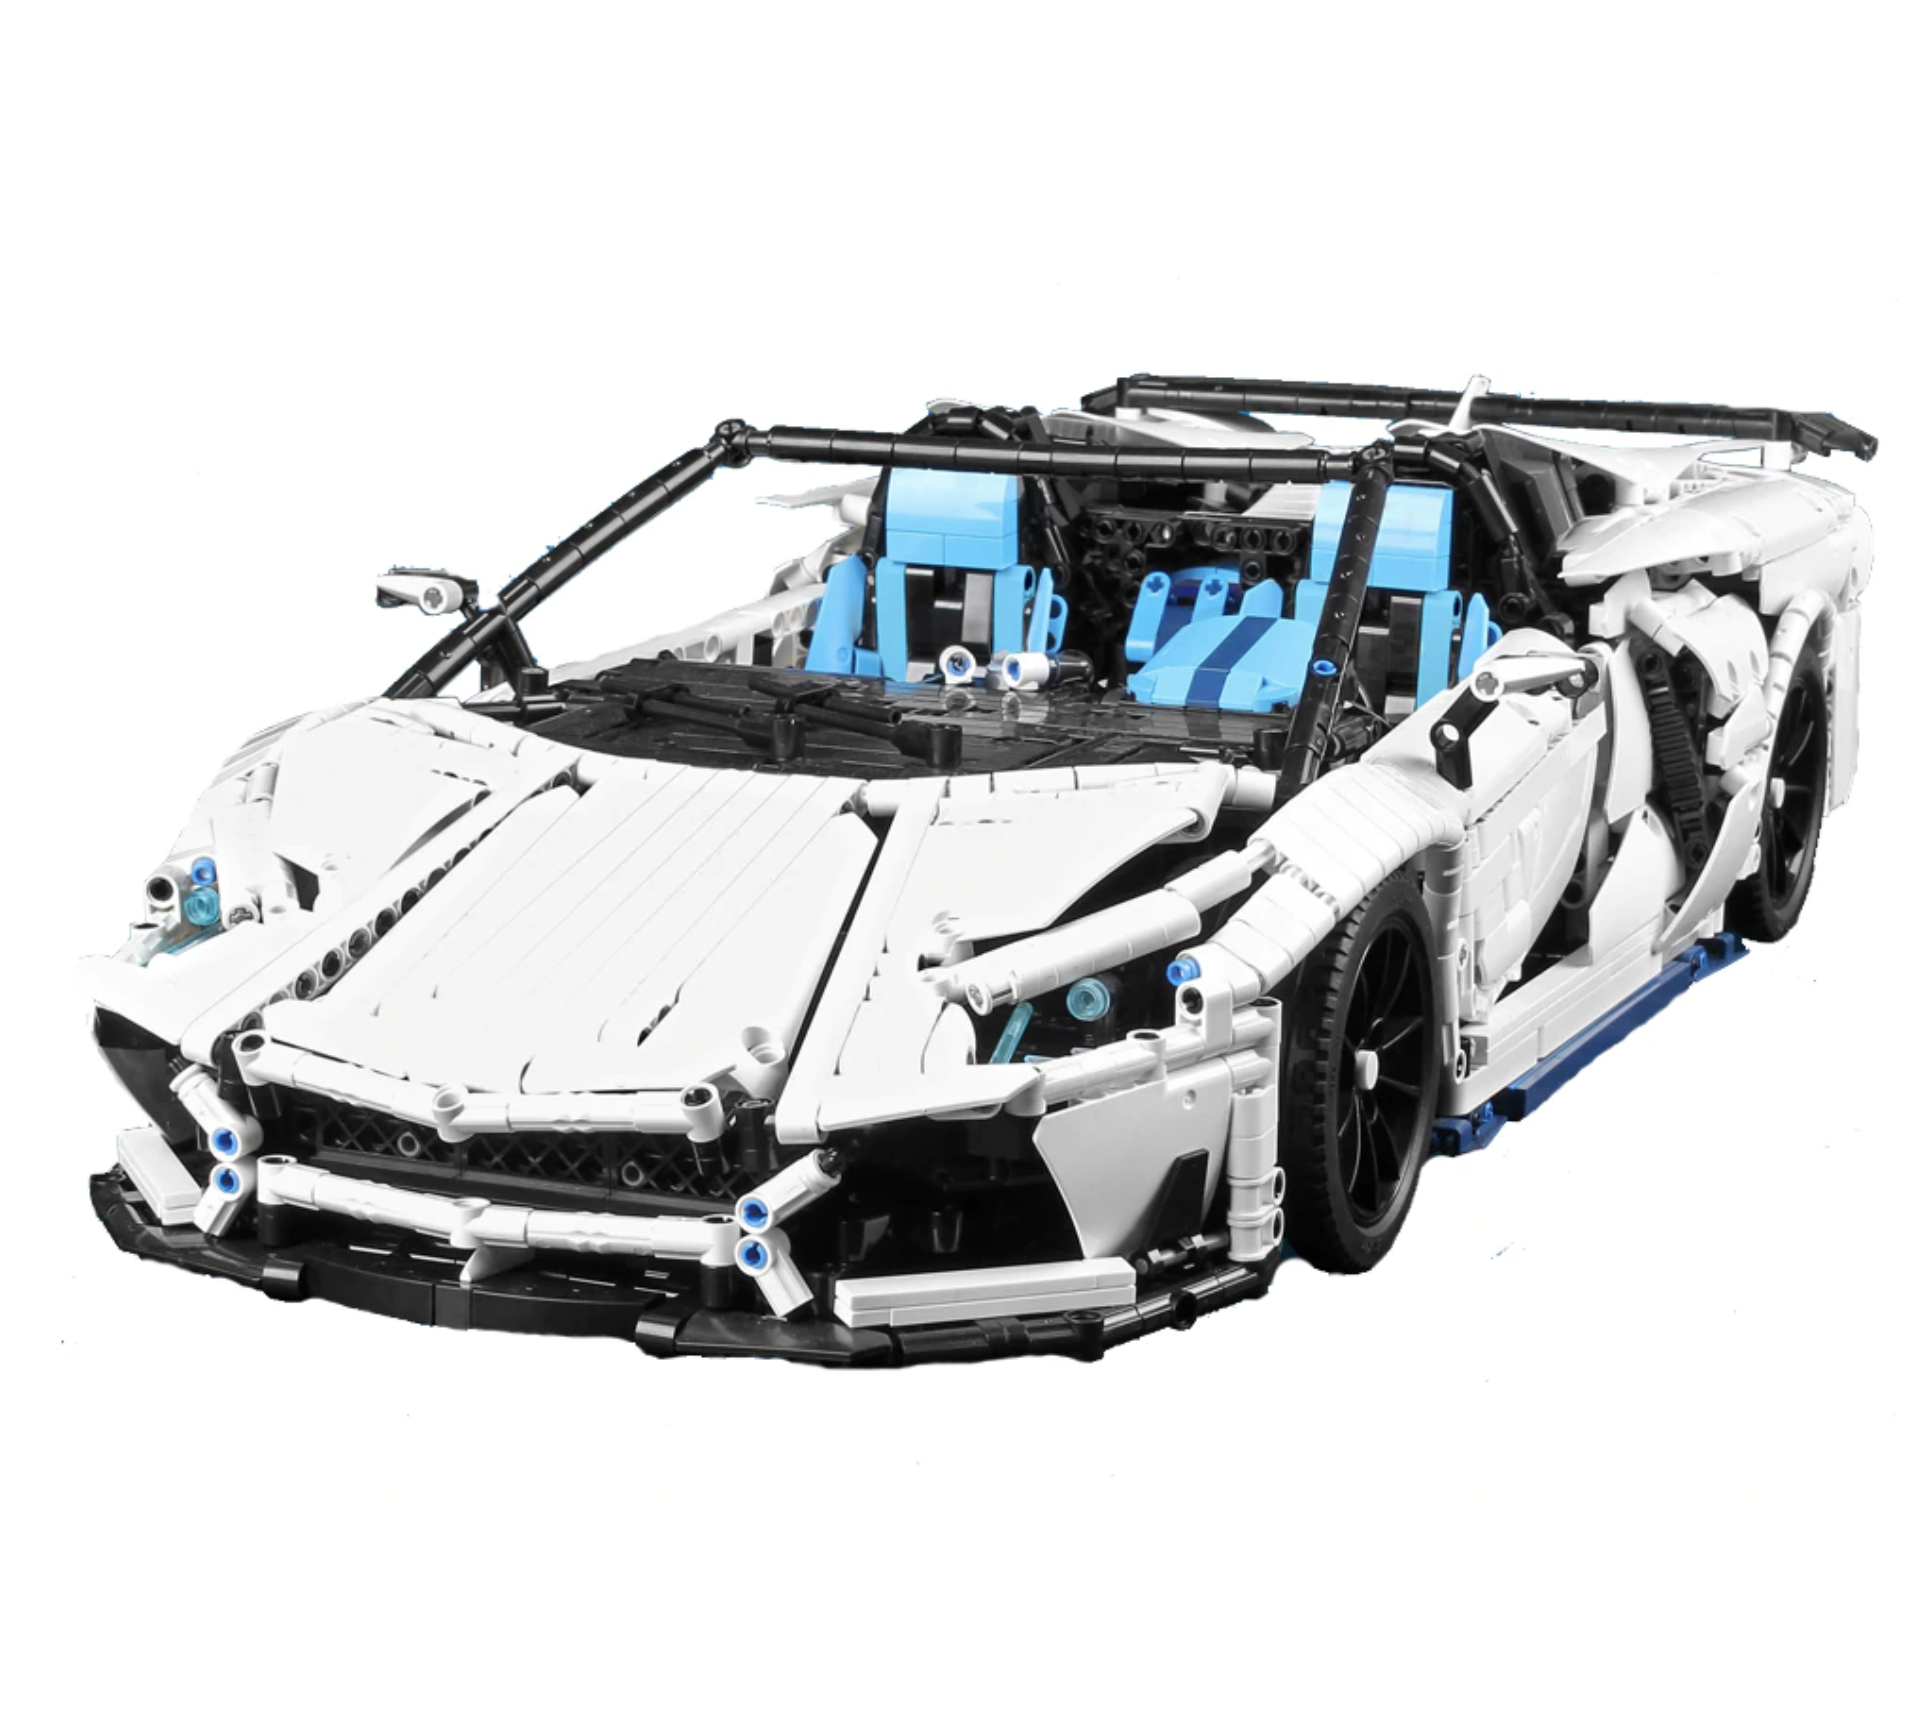 Lamborghini Aventador Roadster s set, compatible with Lego